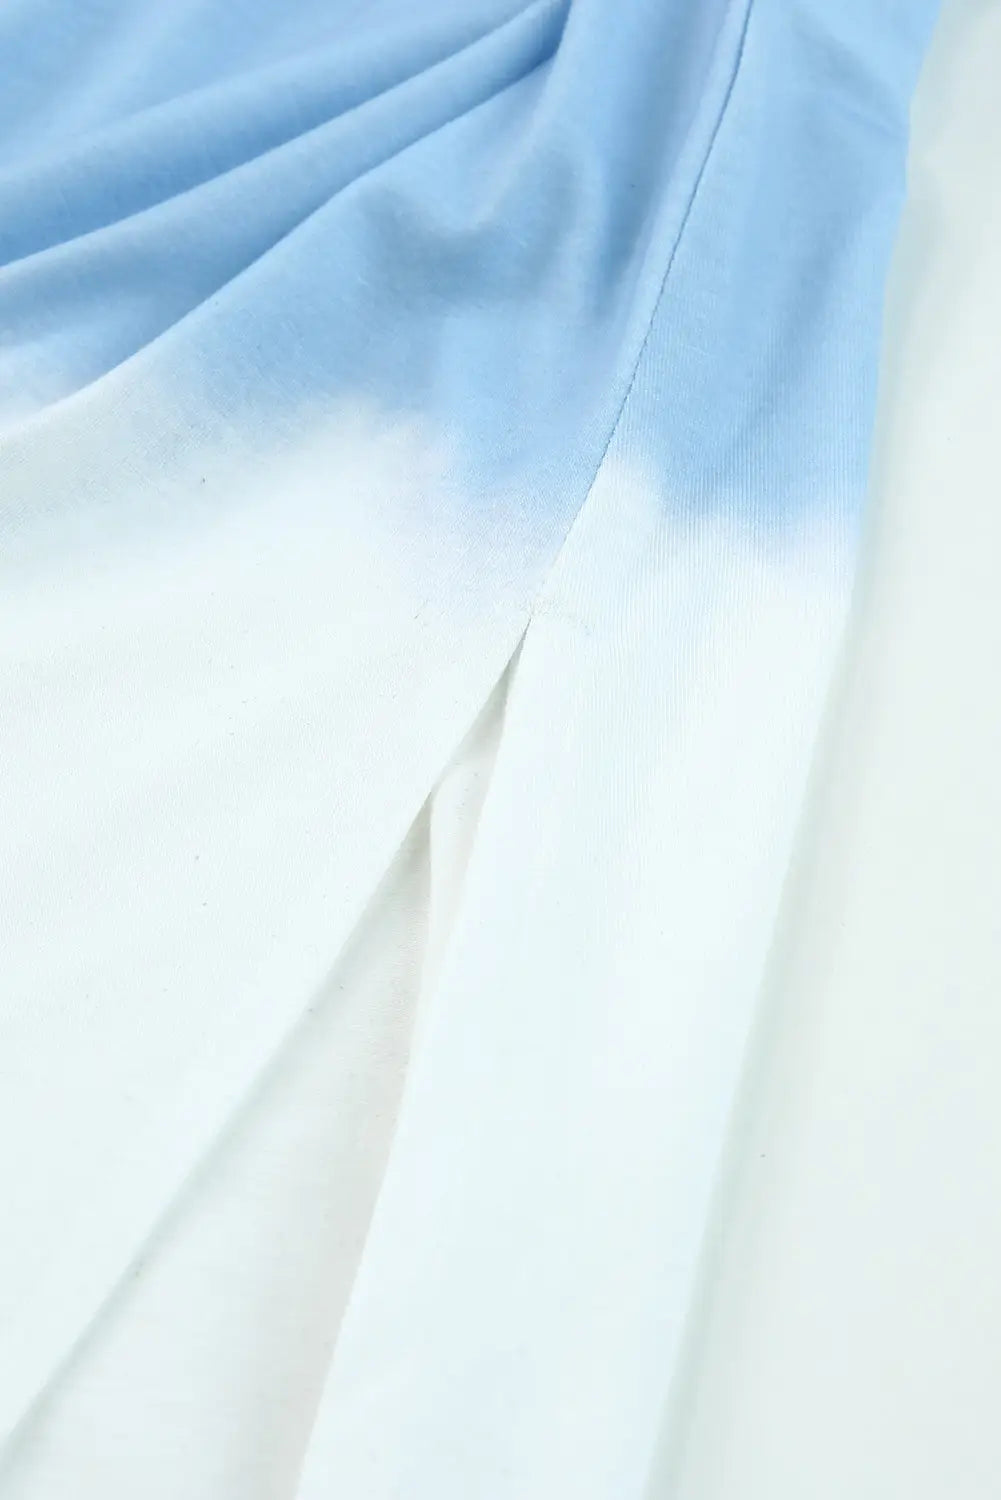 Sky blue spaghetti strap tie dye slit maxi dress - dresses